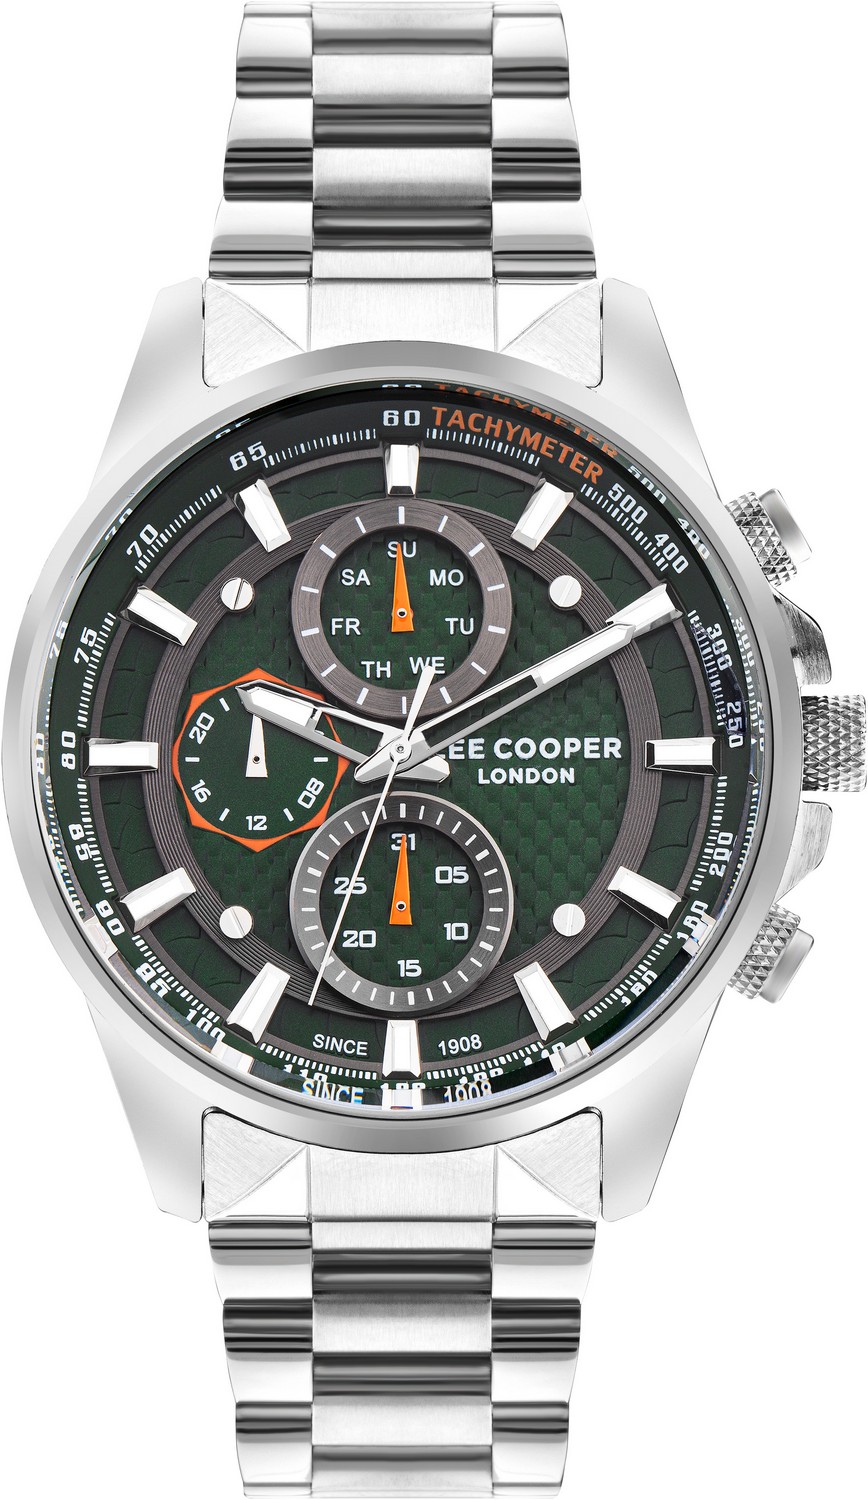 LEE COOPER  Мужские часы, кварцевый механизм, суперметалл, 45 мм